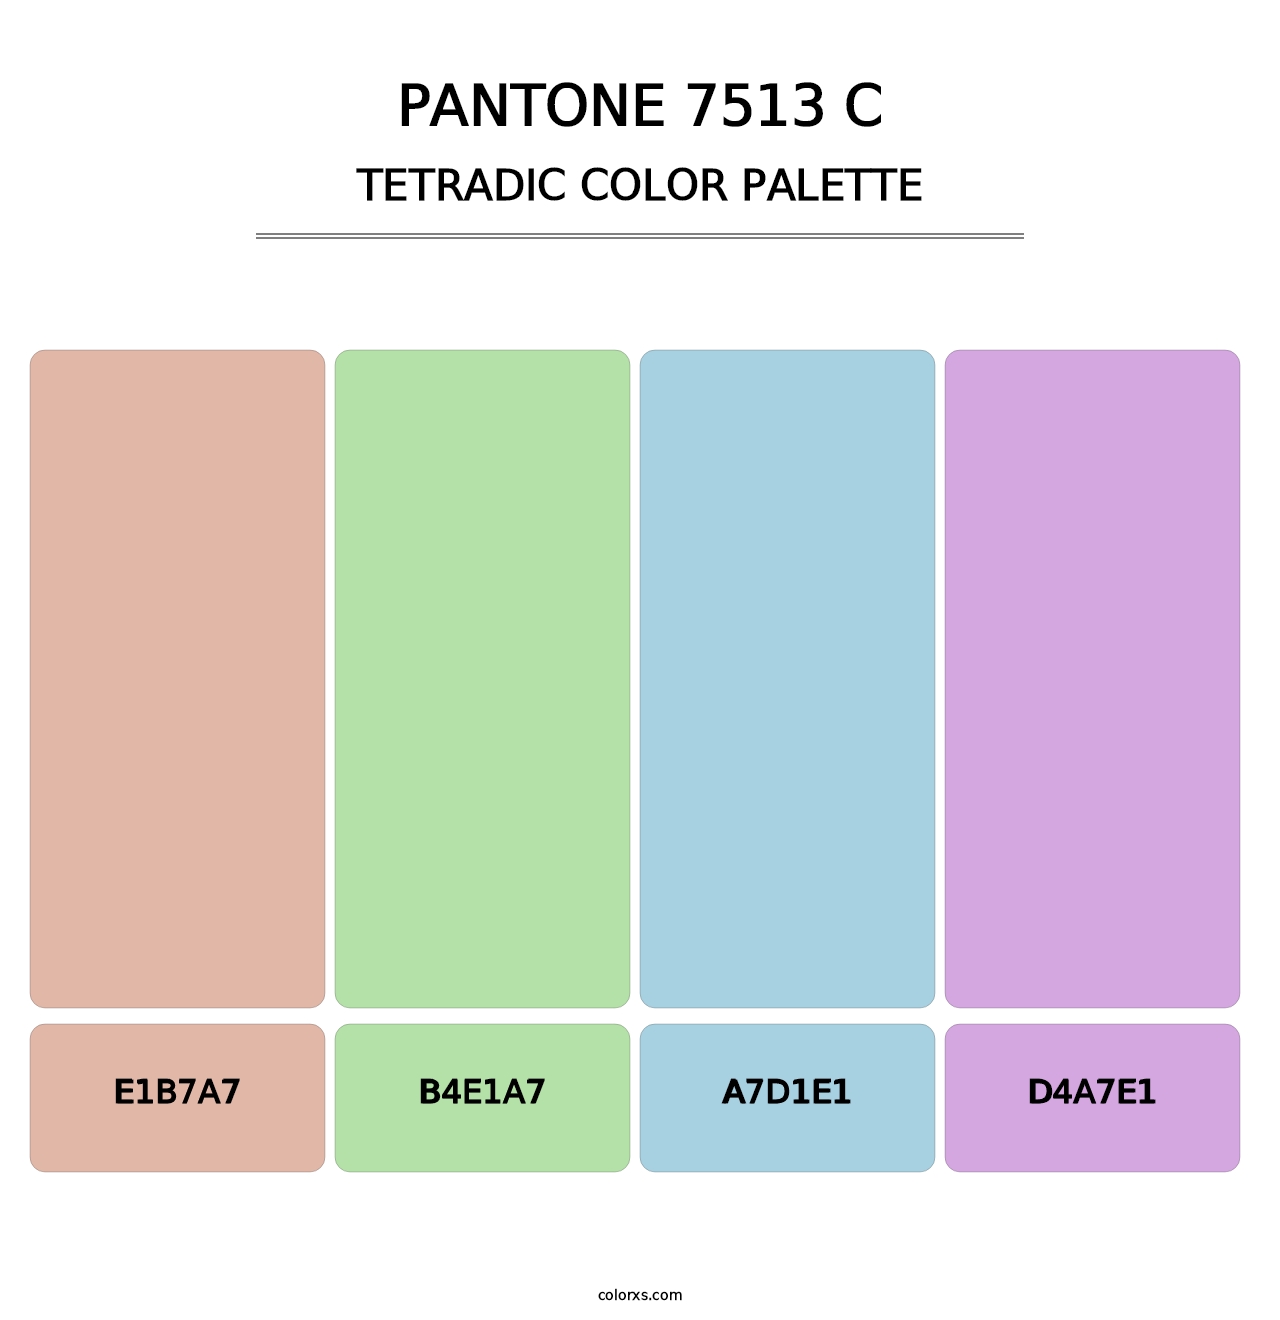 PANTONE 7513 C - Tetradic Color Palette